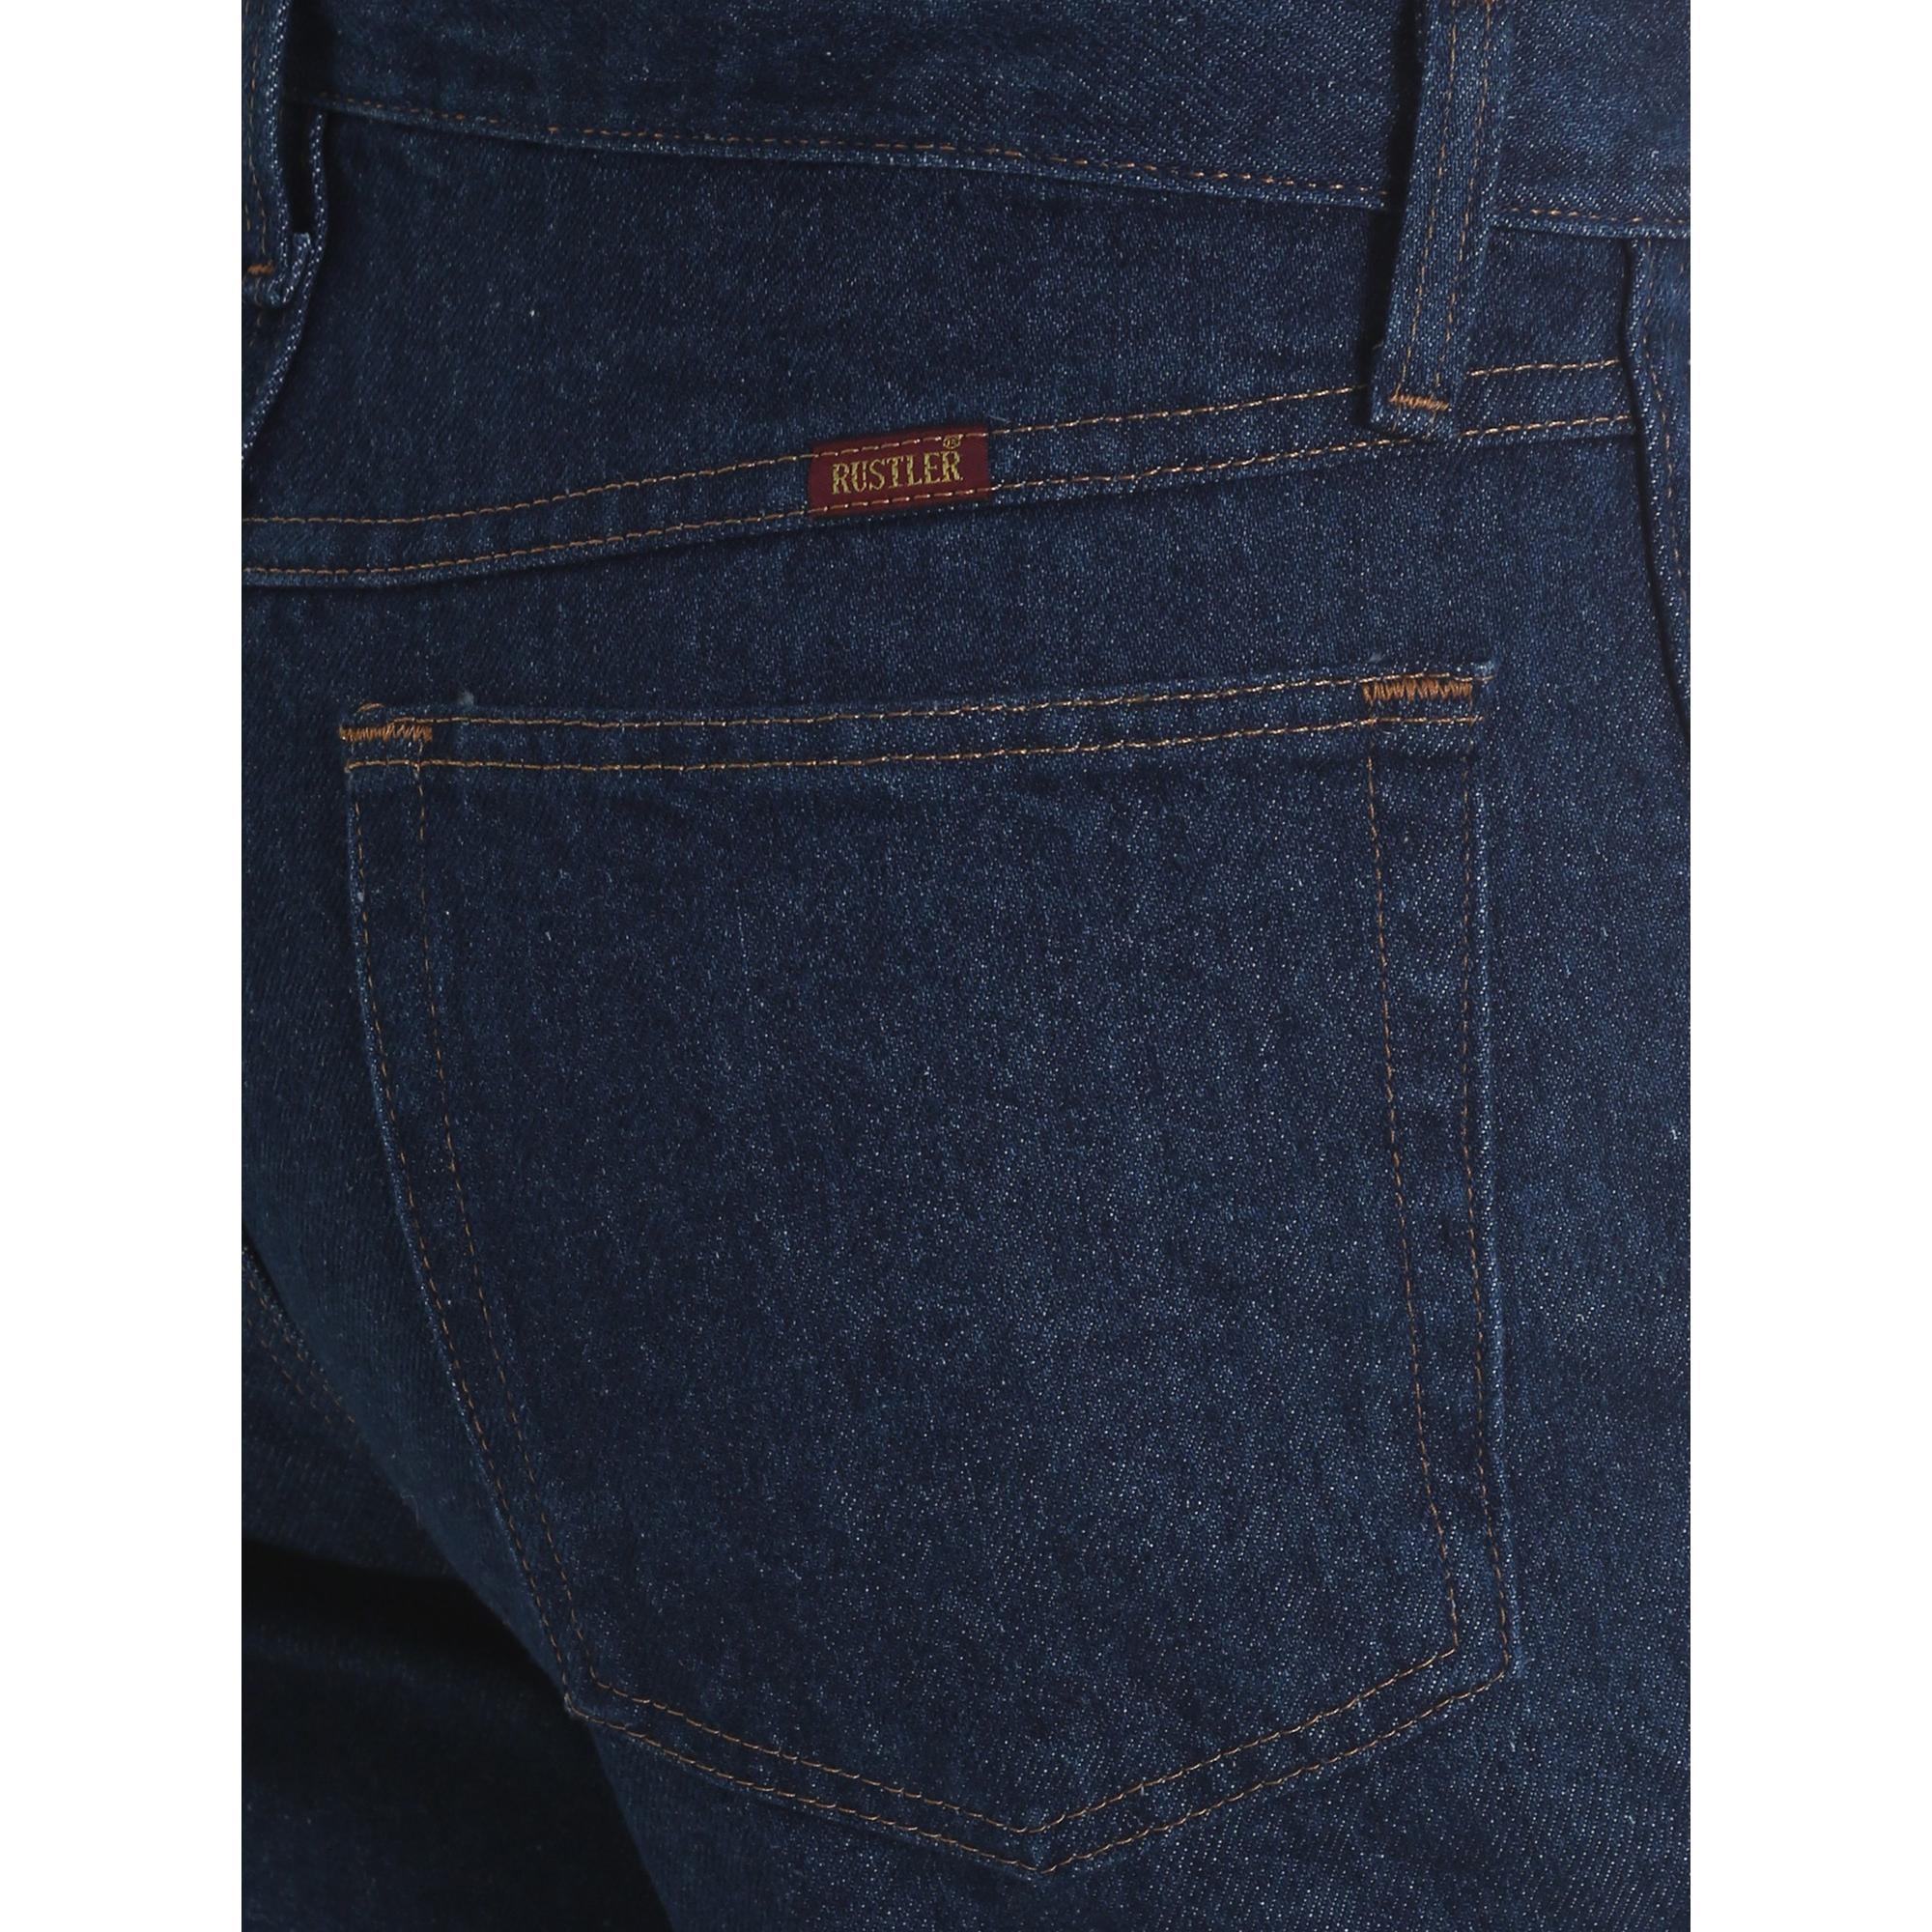 Wrangler Rustler Men's and Big Men's Regular Fit Jeans - image 5 of 7